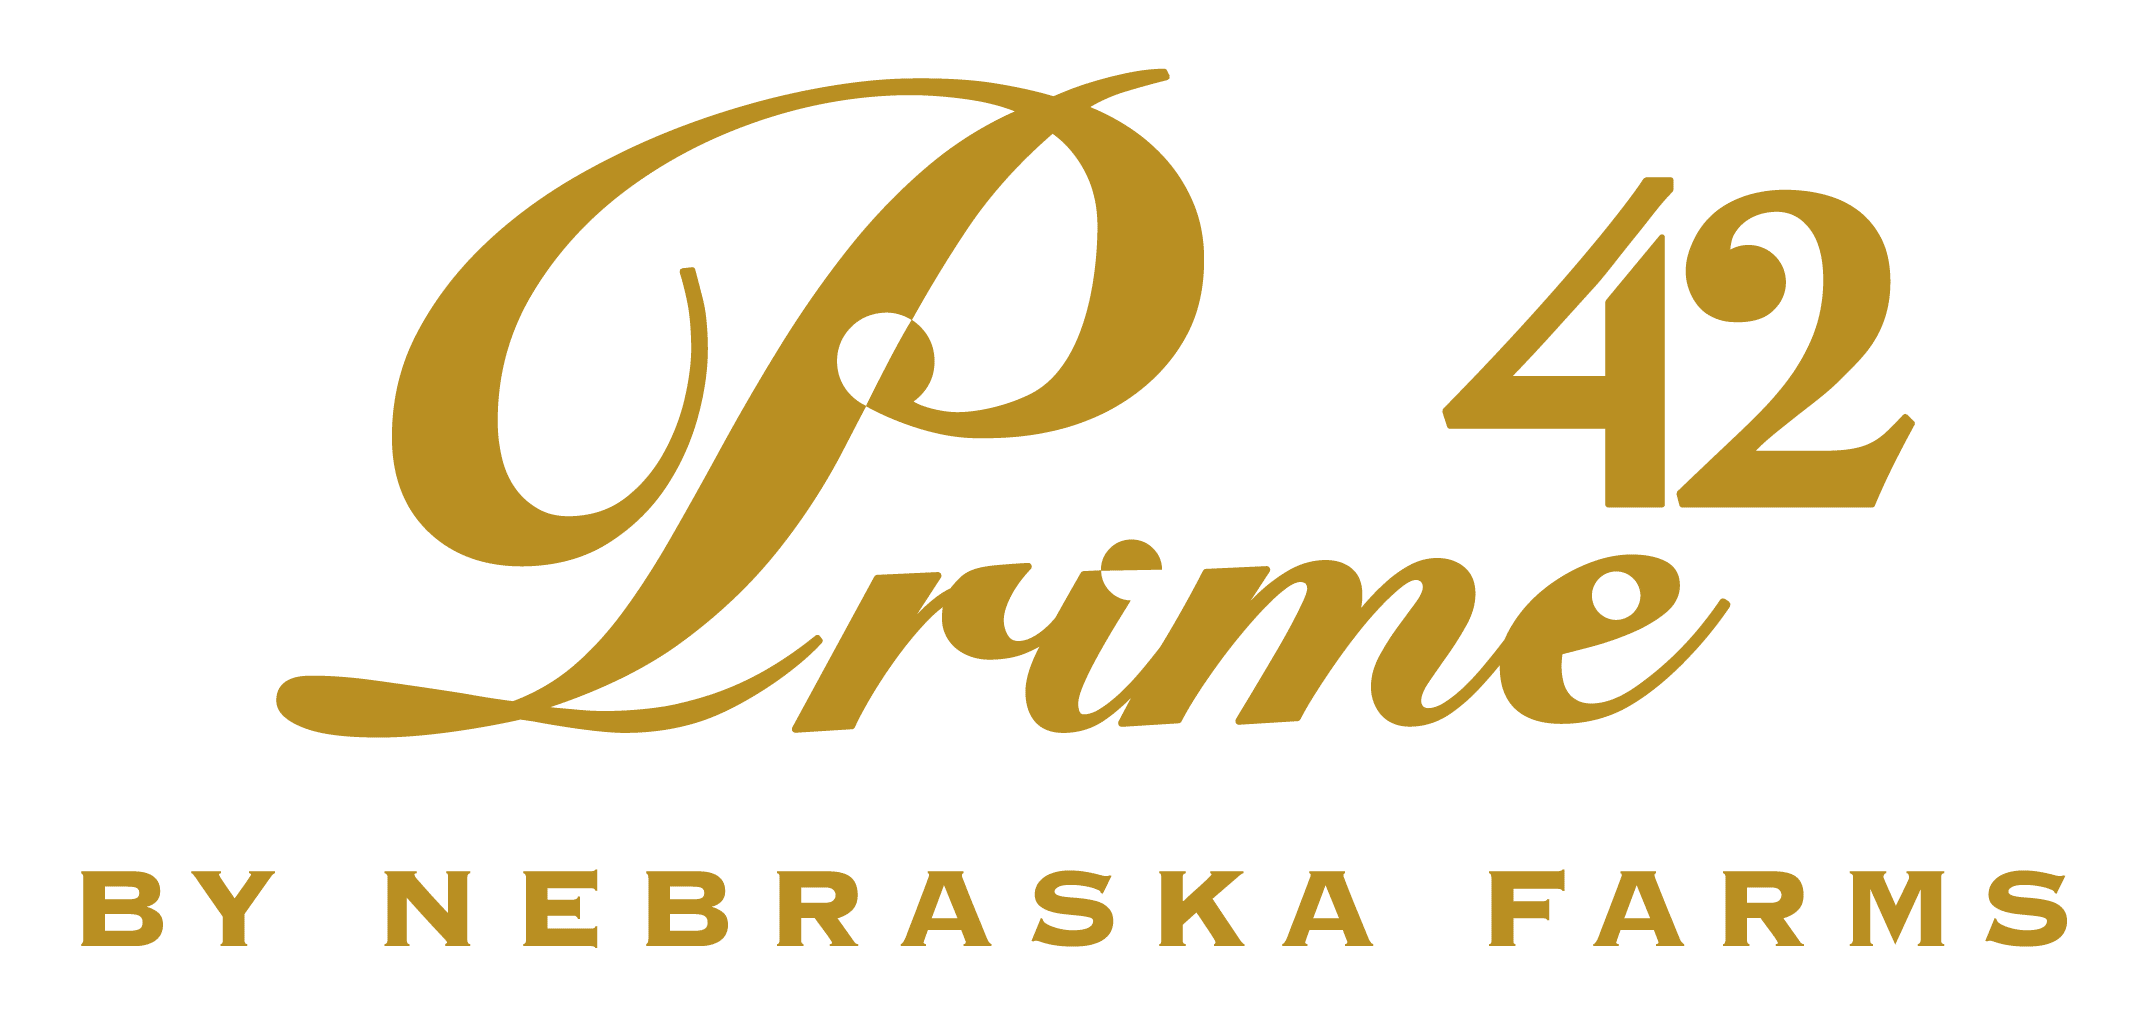 Prime 42 BY NEBRASKA FARMS